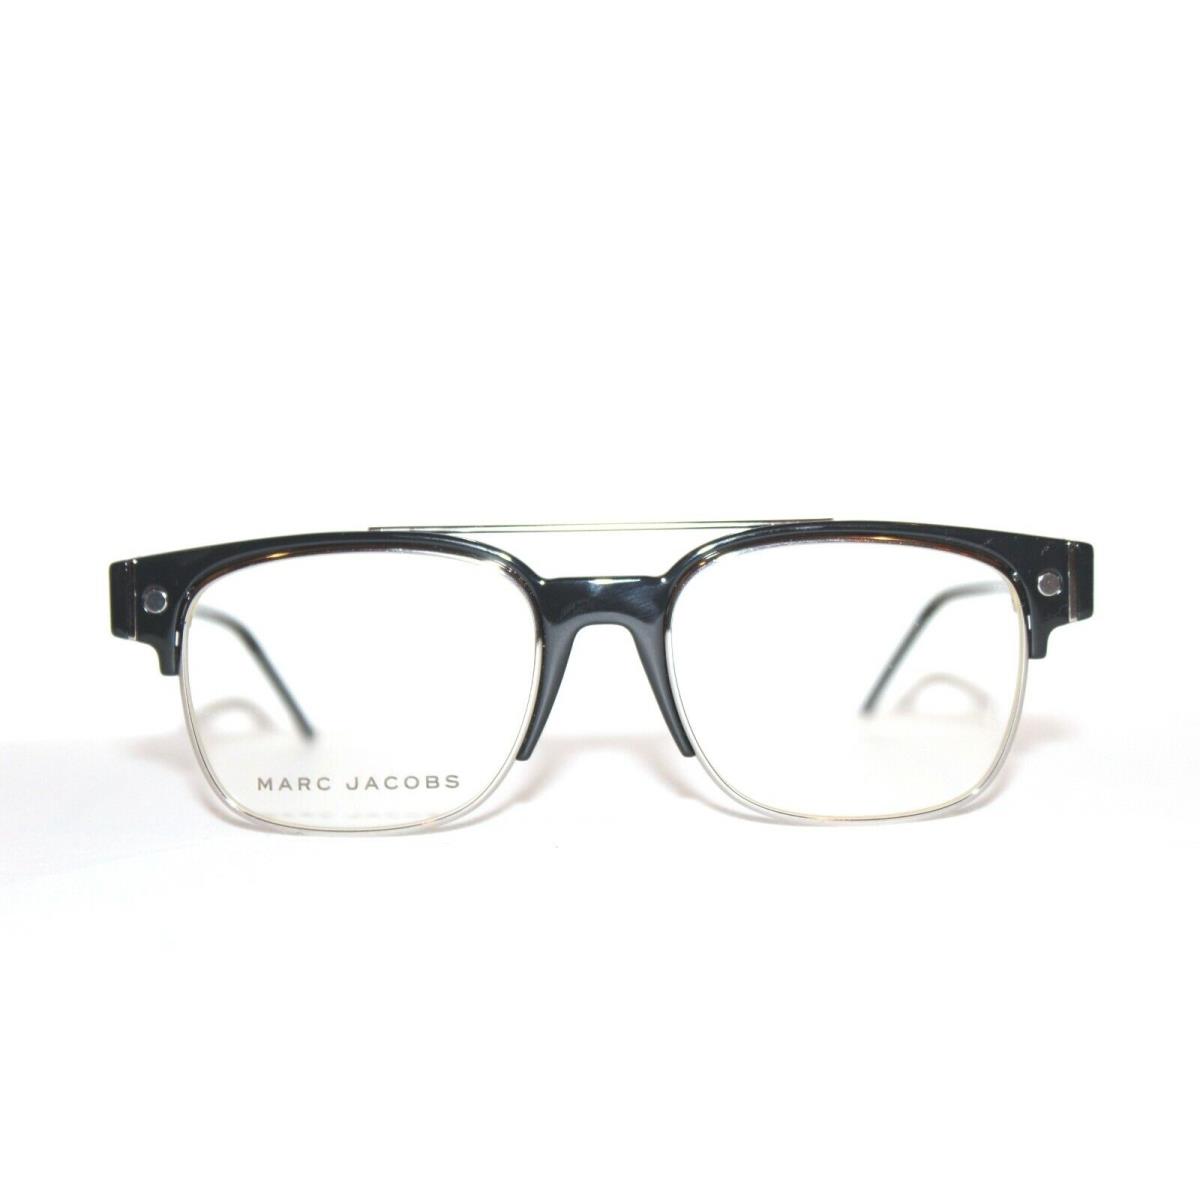 Marc Jacobs 5 U4Z Black Silver Eyeglasses RX 51-18-140 Italy Case